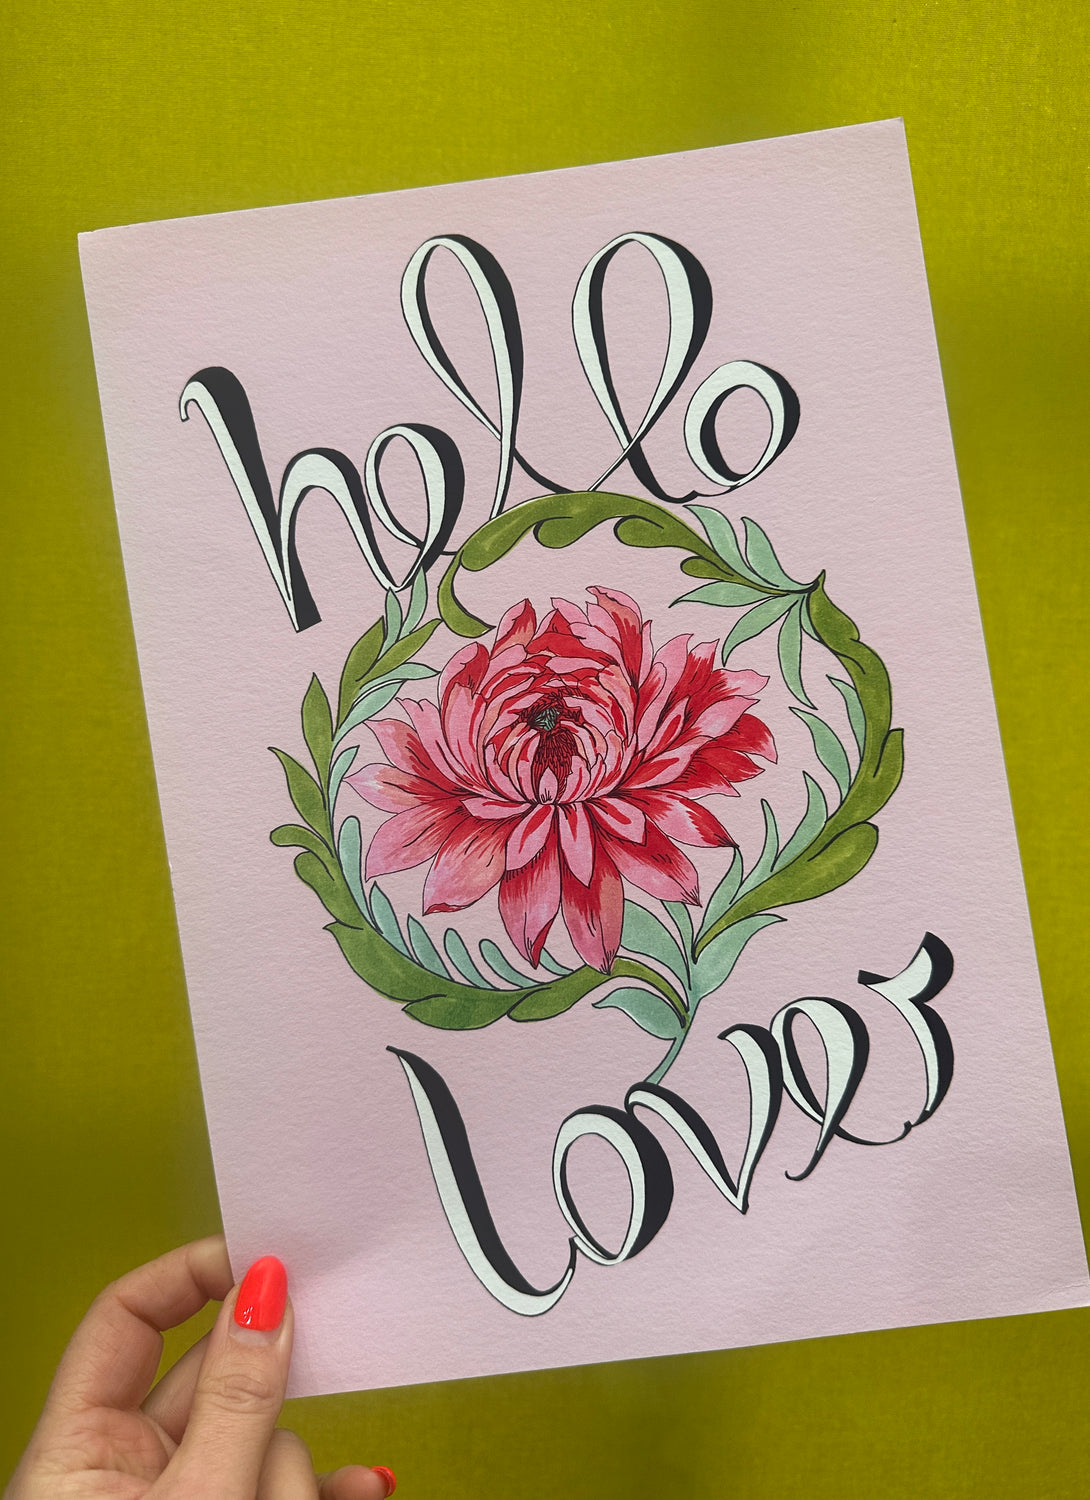 Hello Lover Print